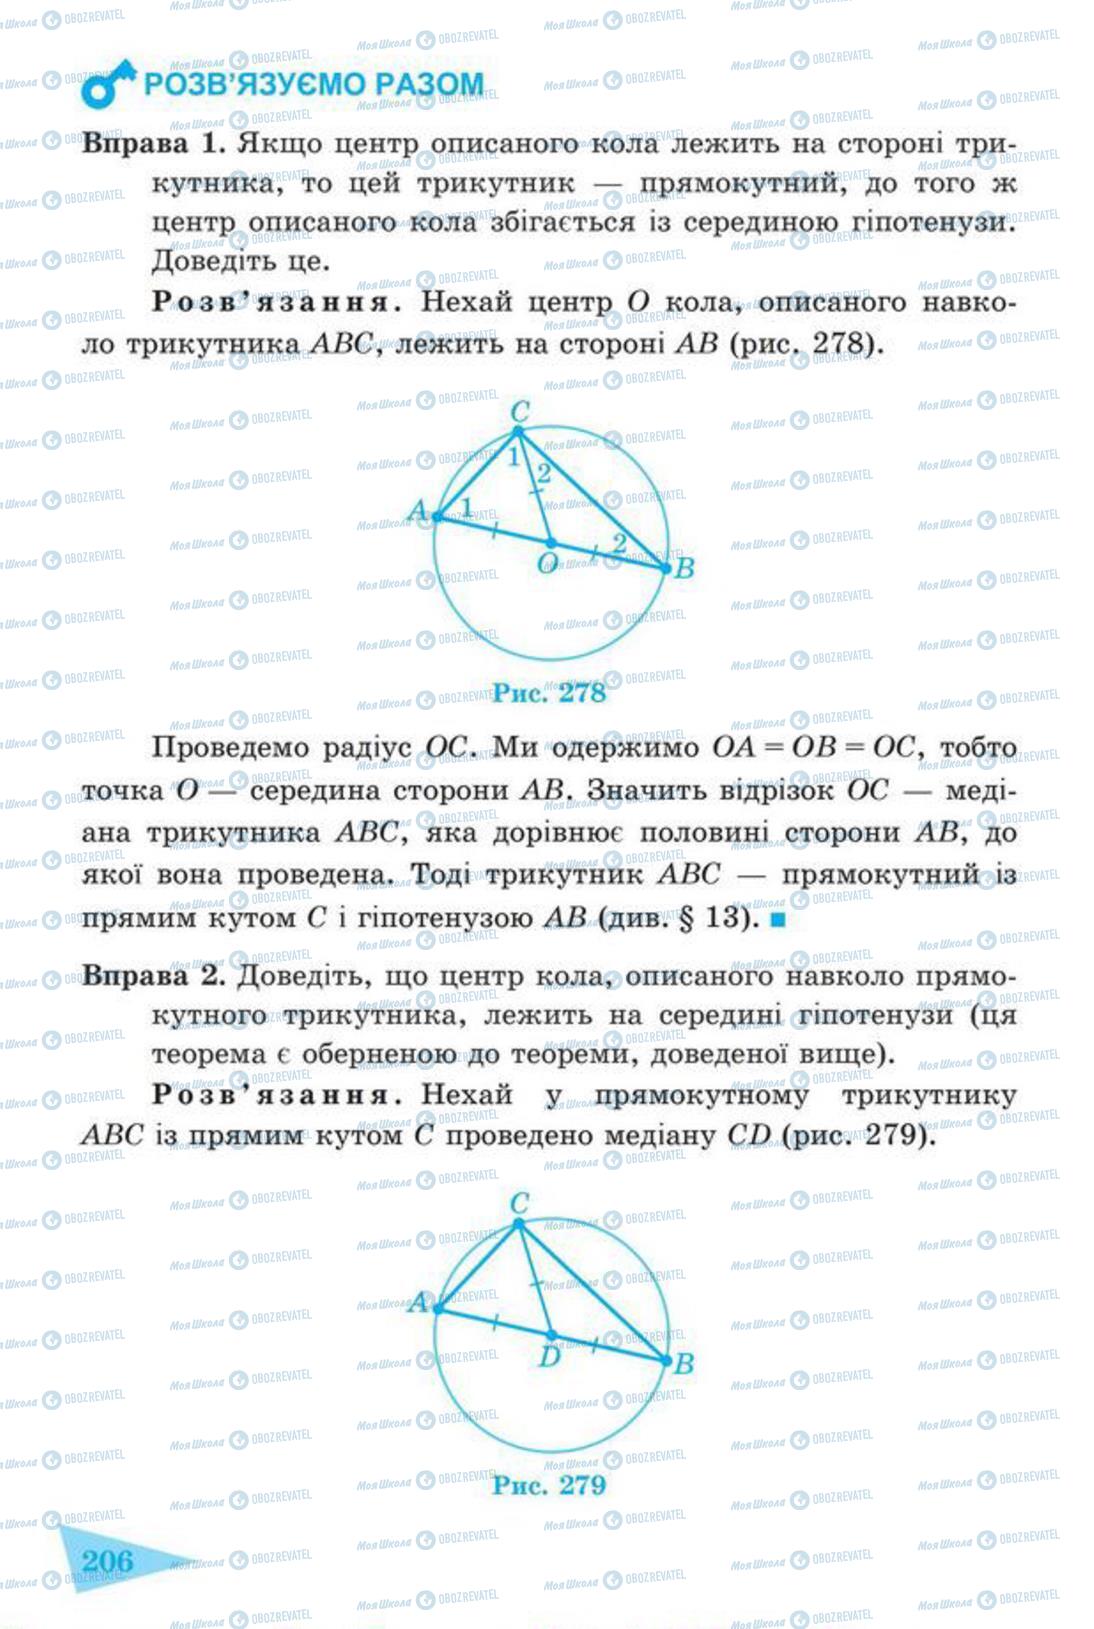 Учебники Геометрия 7 класс страница 206